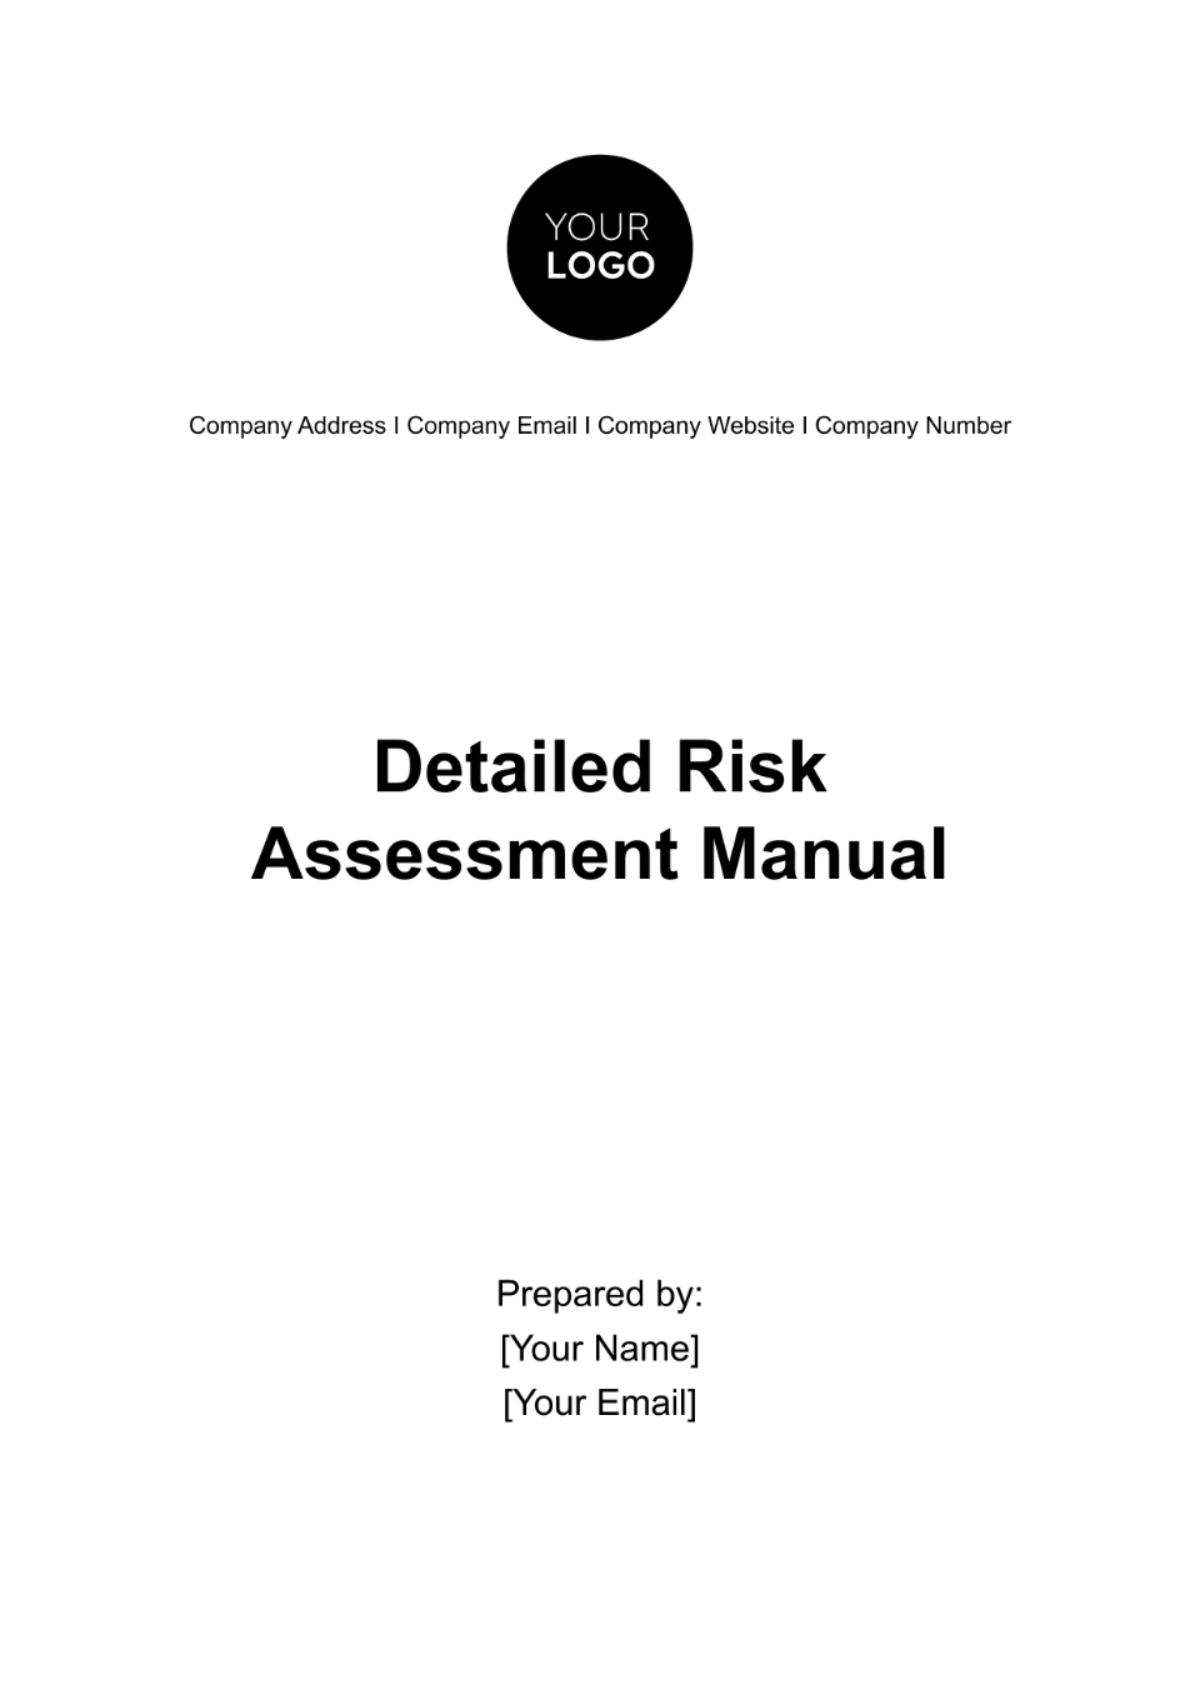 Detailed Risk Assessment Manual Template